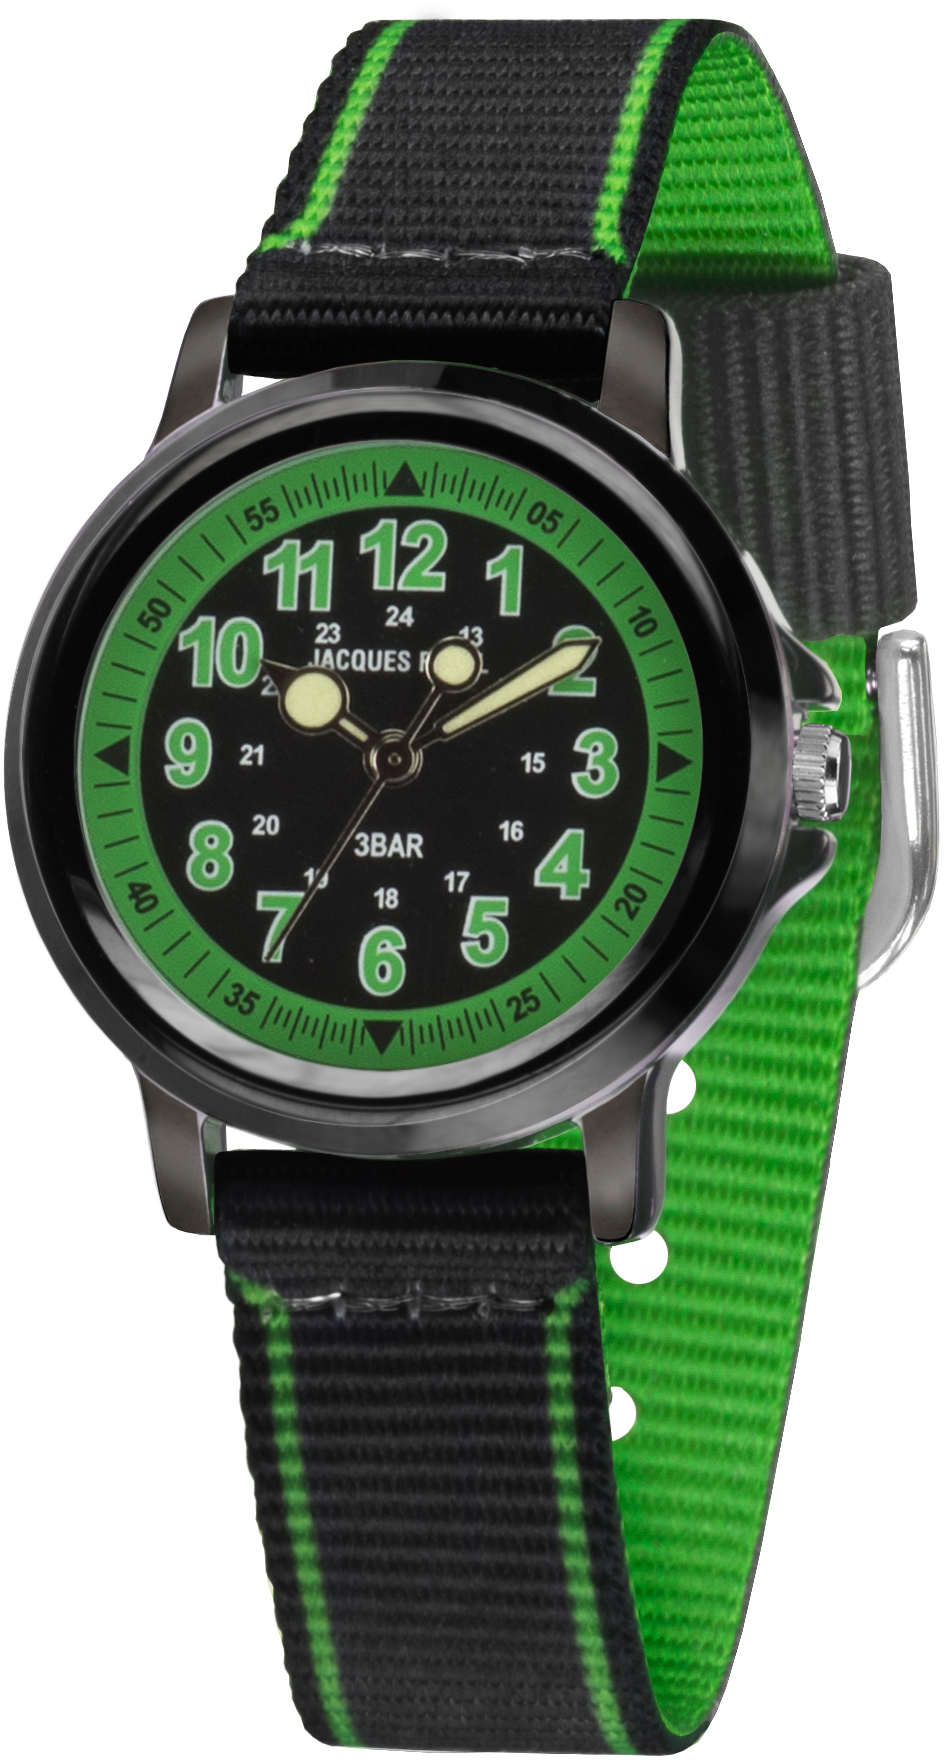 Armbanduhren grün kaufen » I'm walking